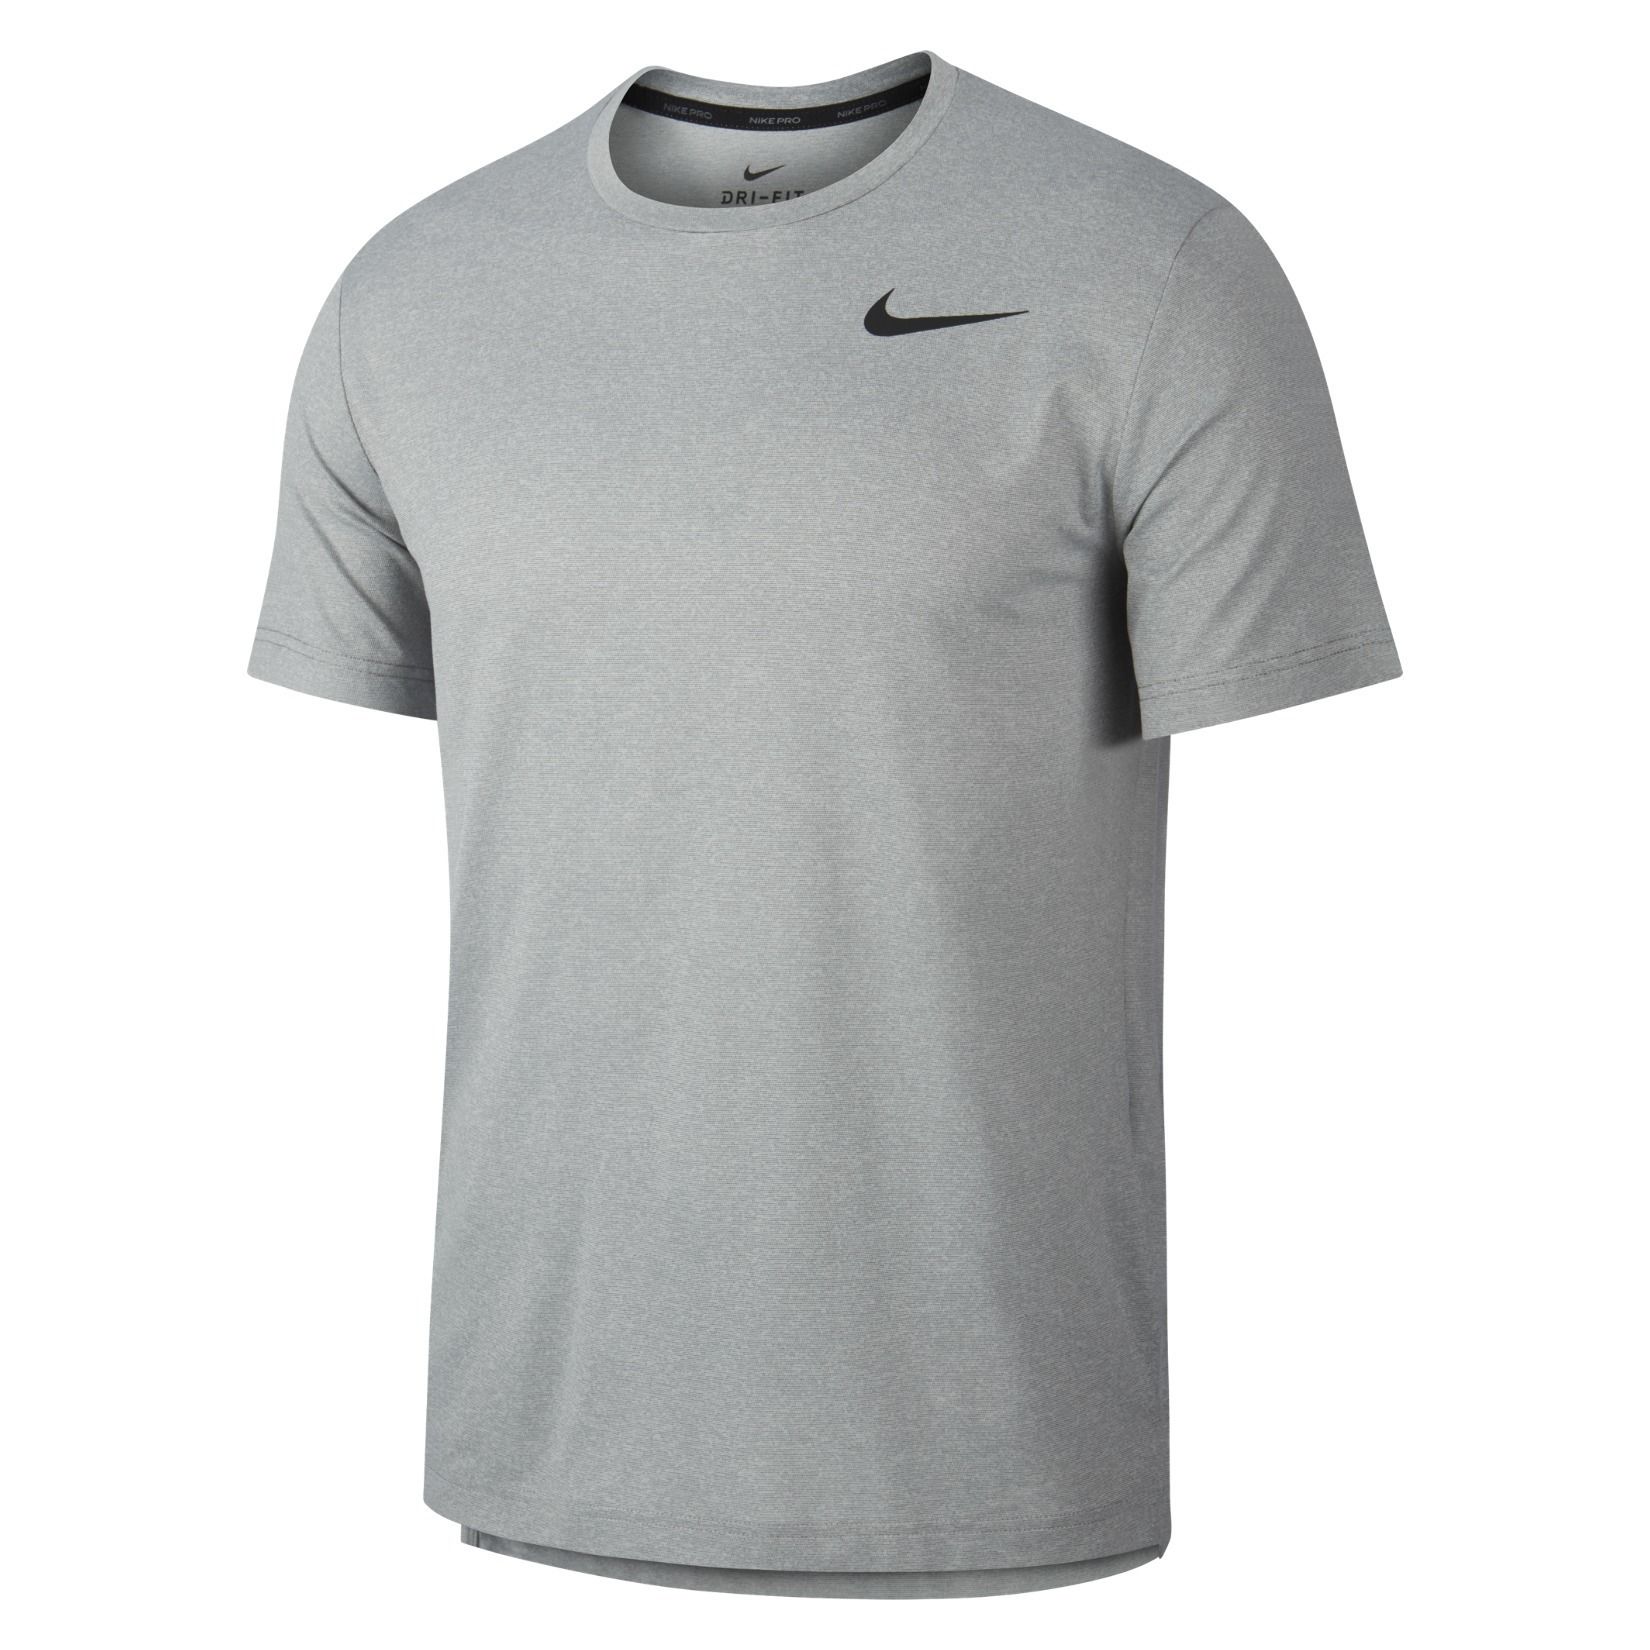 Nike Pro Short Sleeve Top - Kitlocker.com